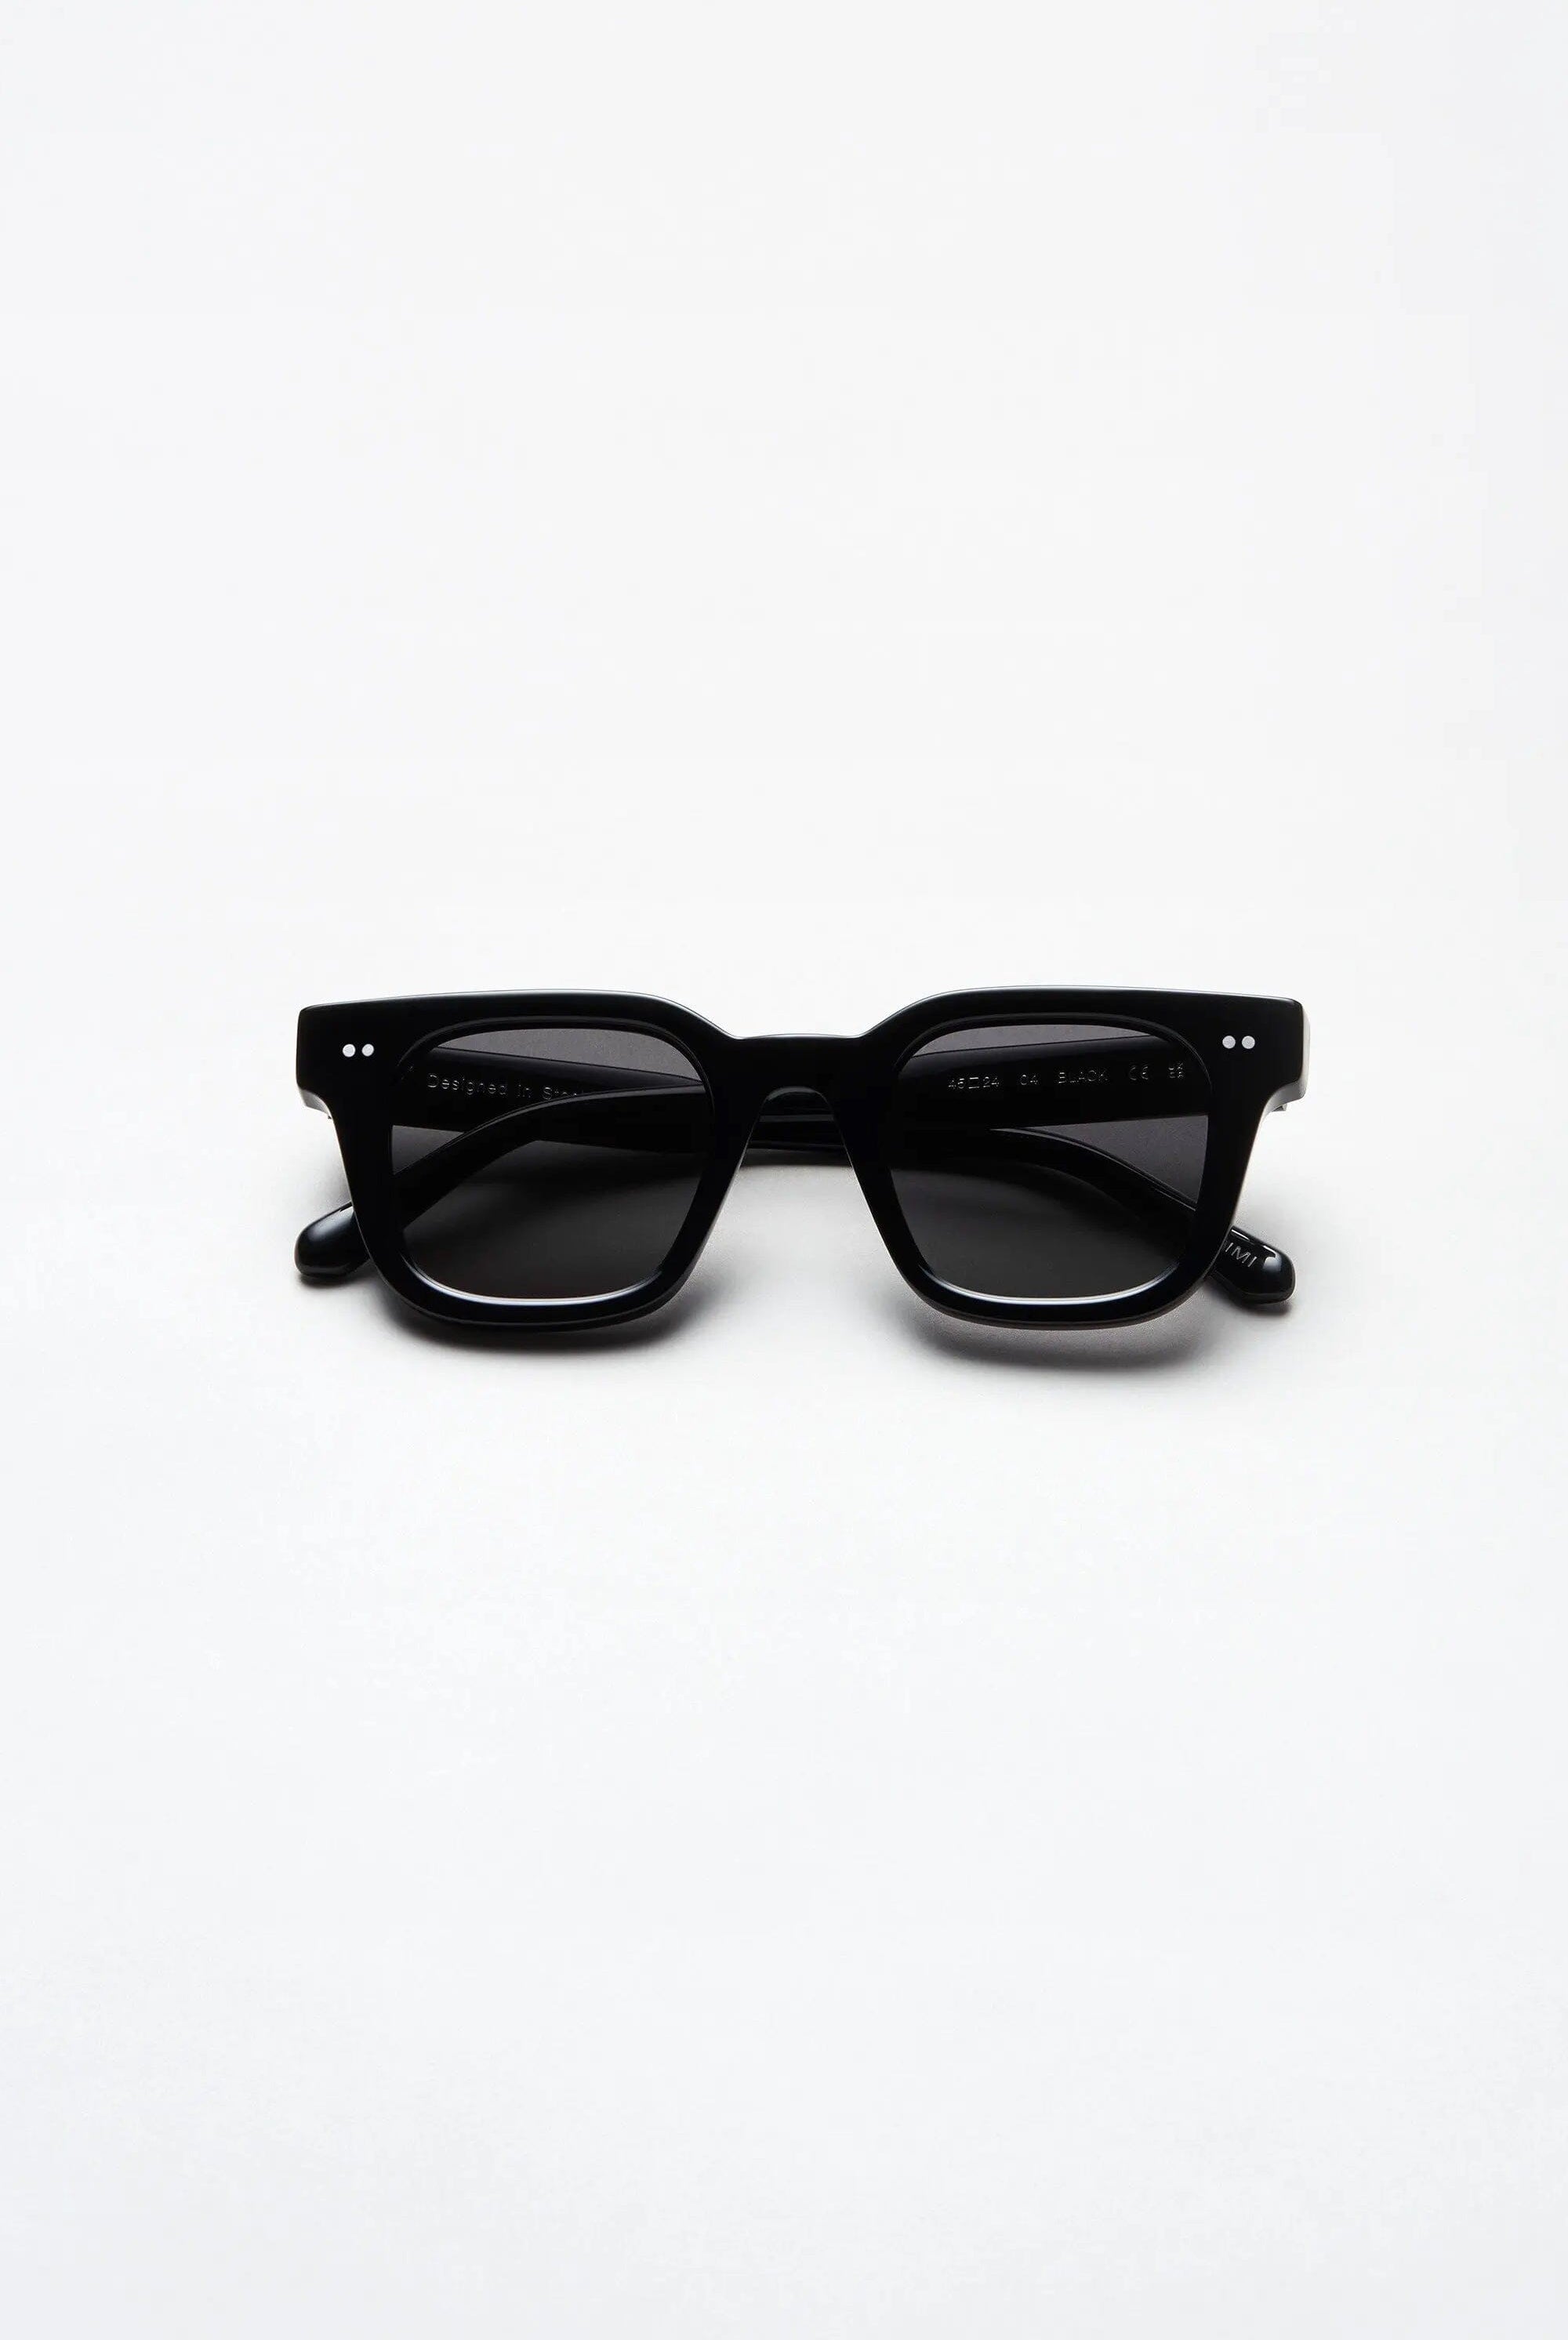 CHIMI | 04 Sunglasses In Black - SHOP YUCCA Sunglasses CHIMI - YUCCA 